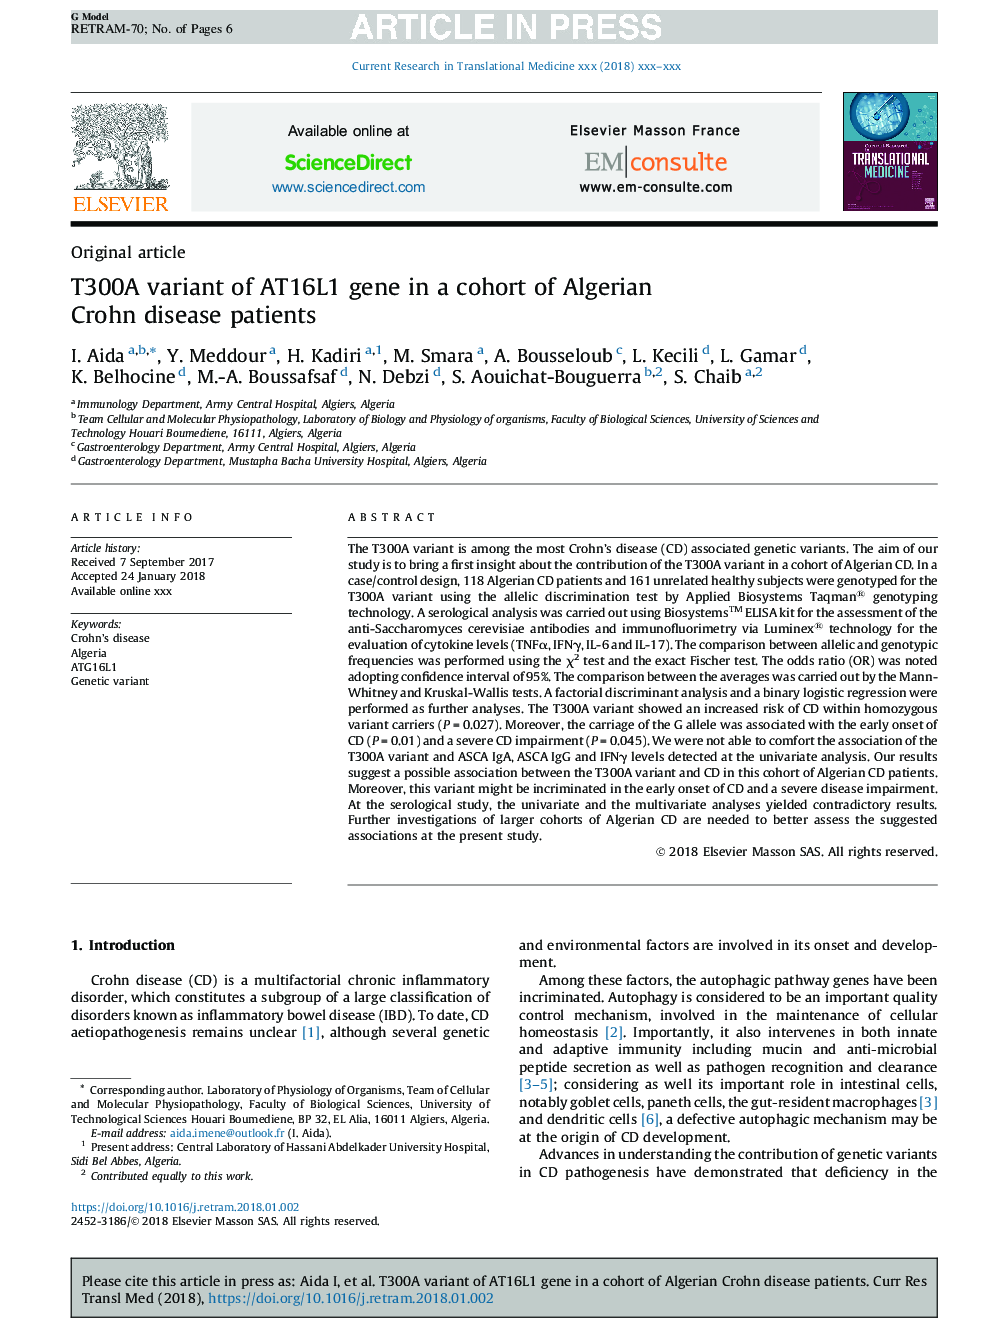 T300A variant of AT16L1 gene in a cohort of Algerian Crohn disease patients